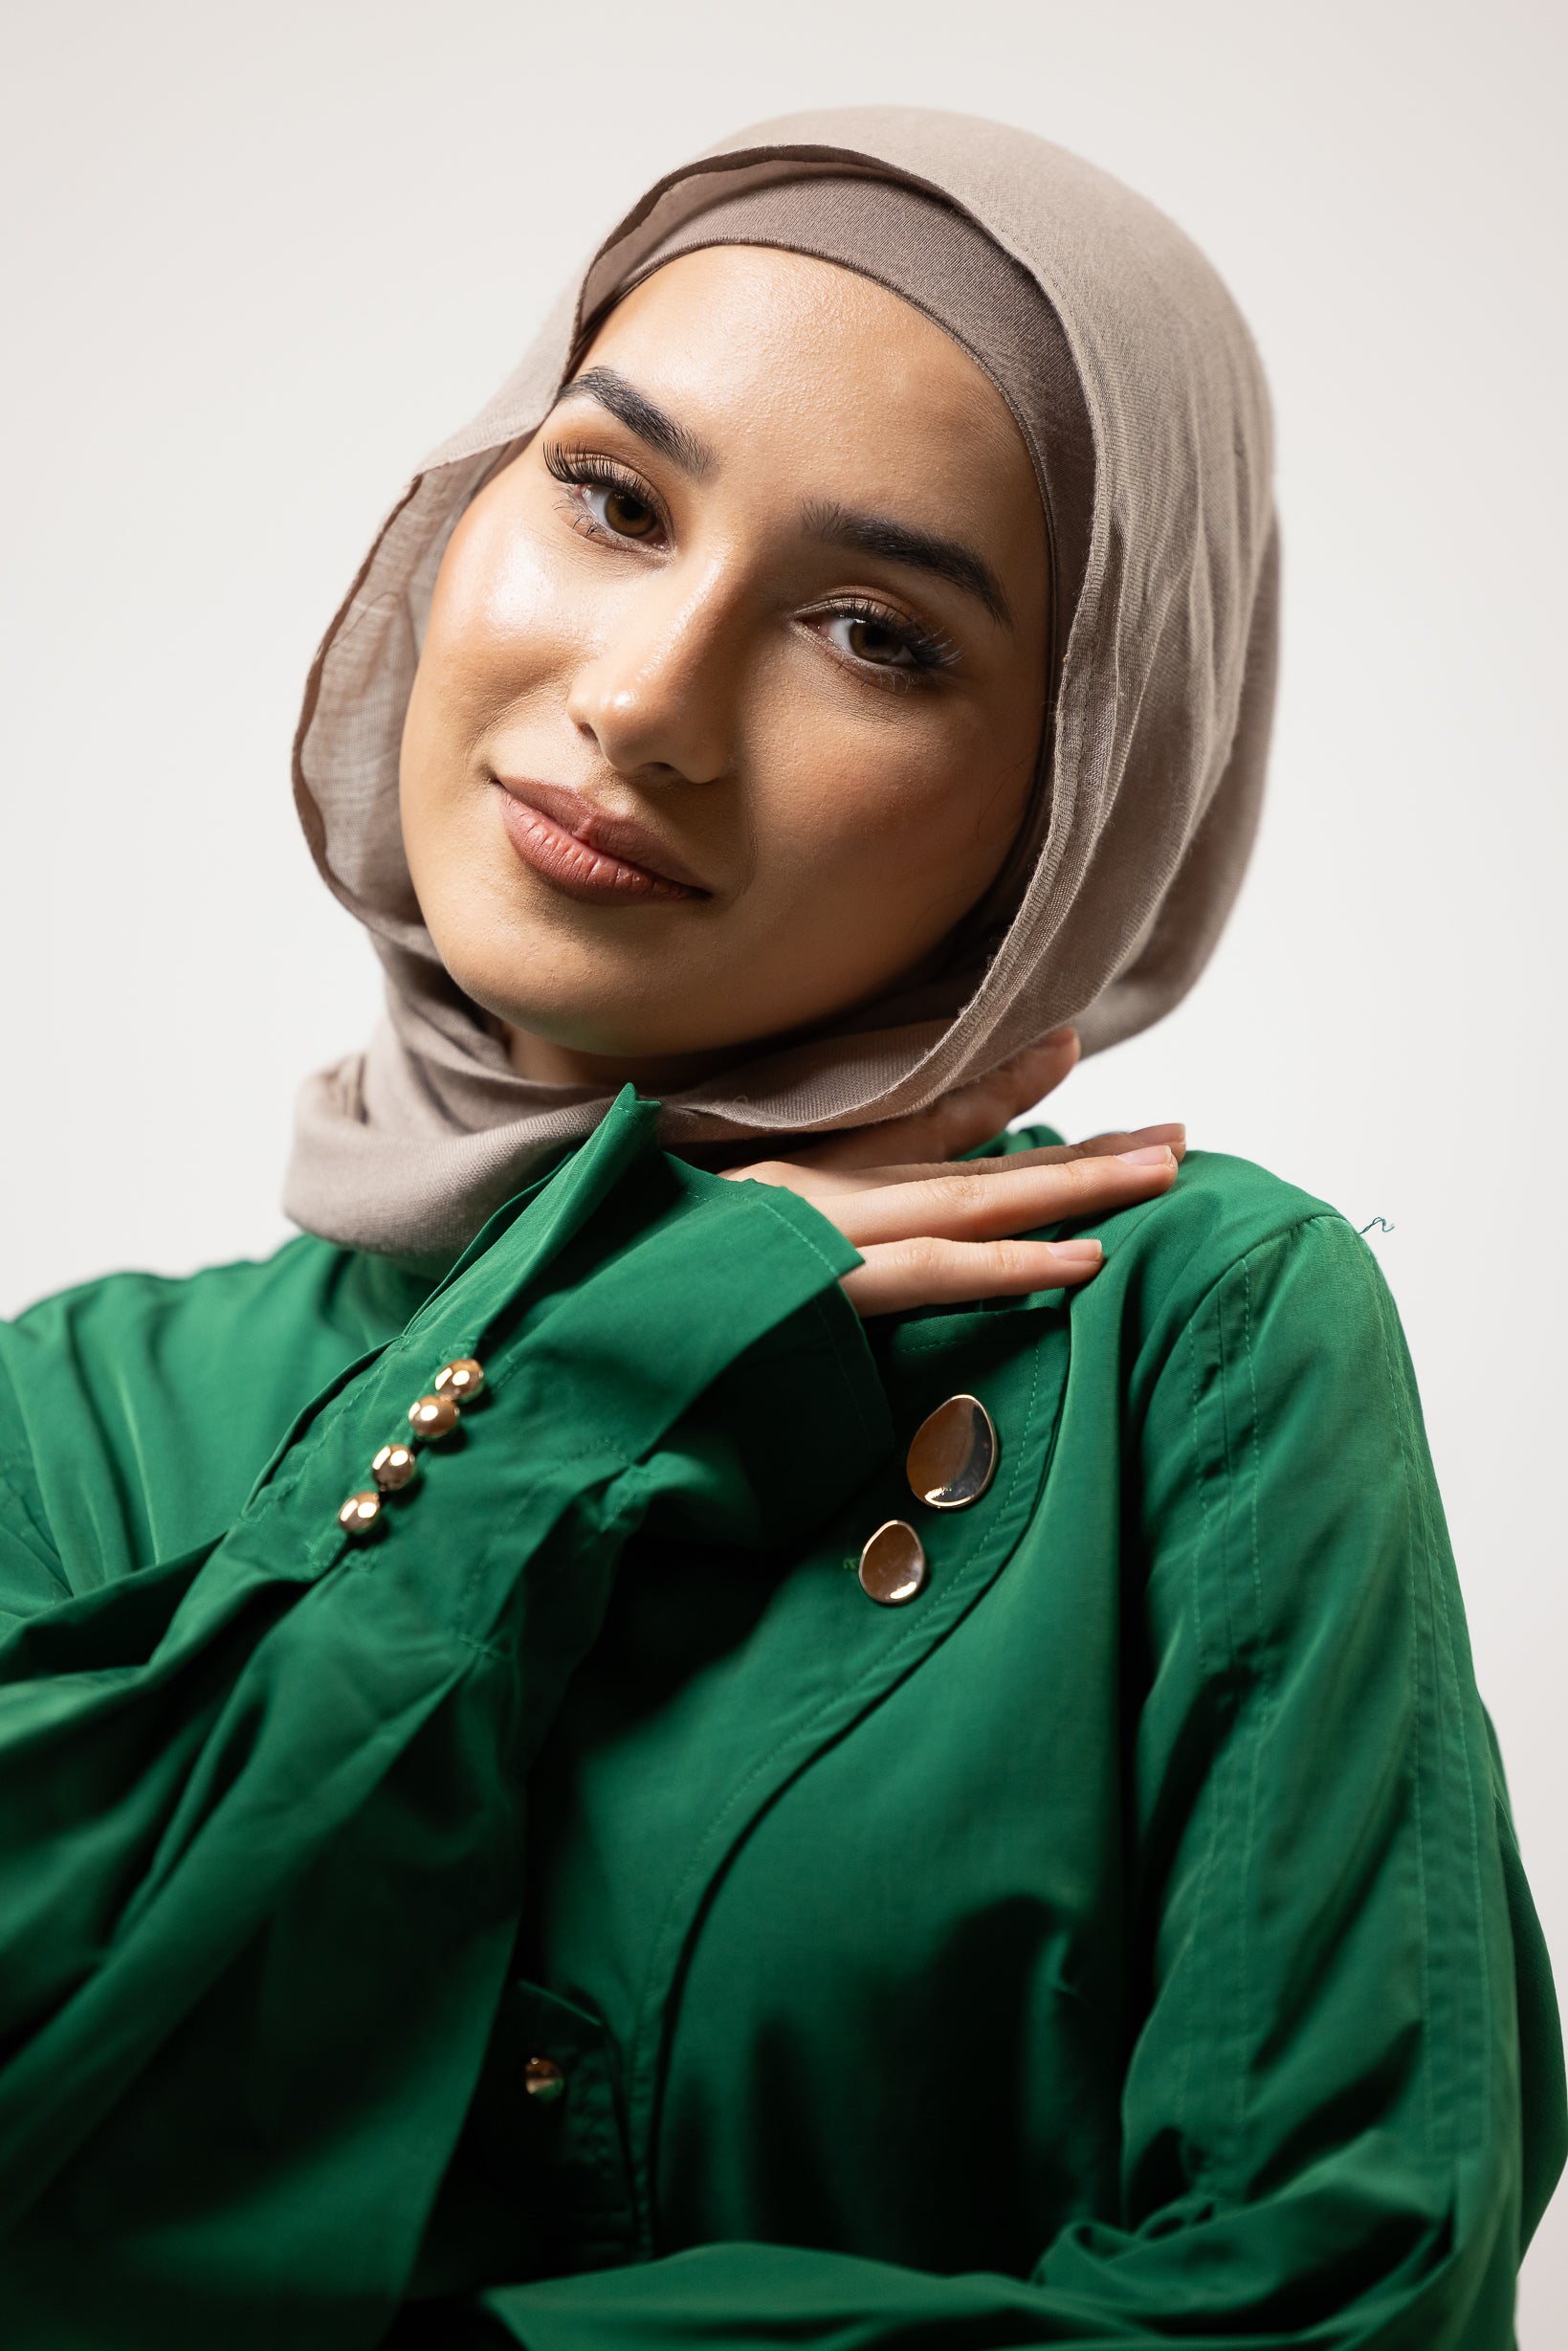 M8278Green-dress-abaya